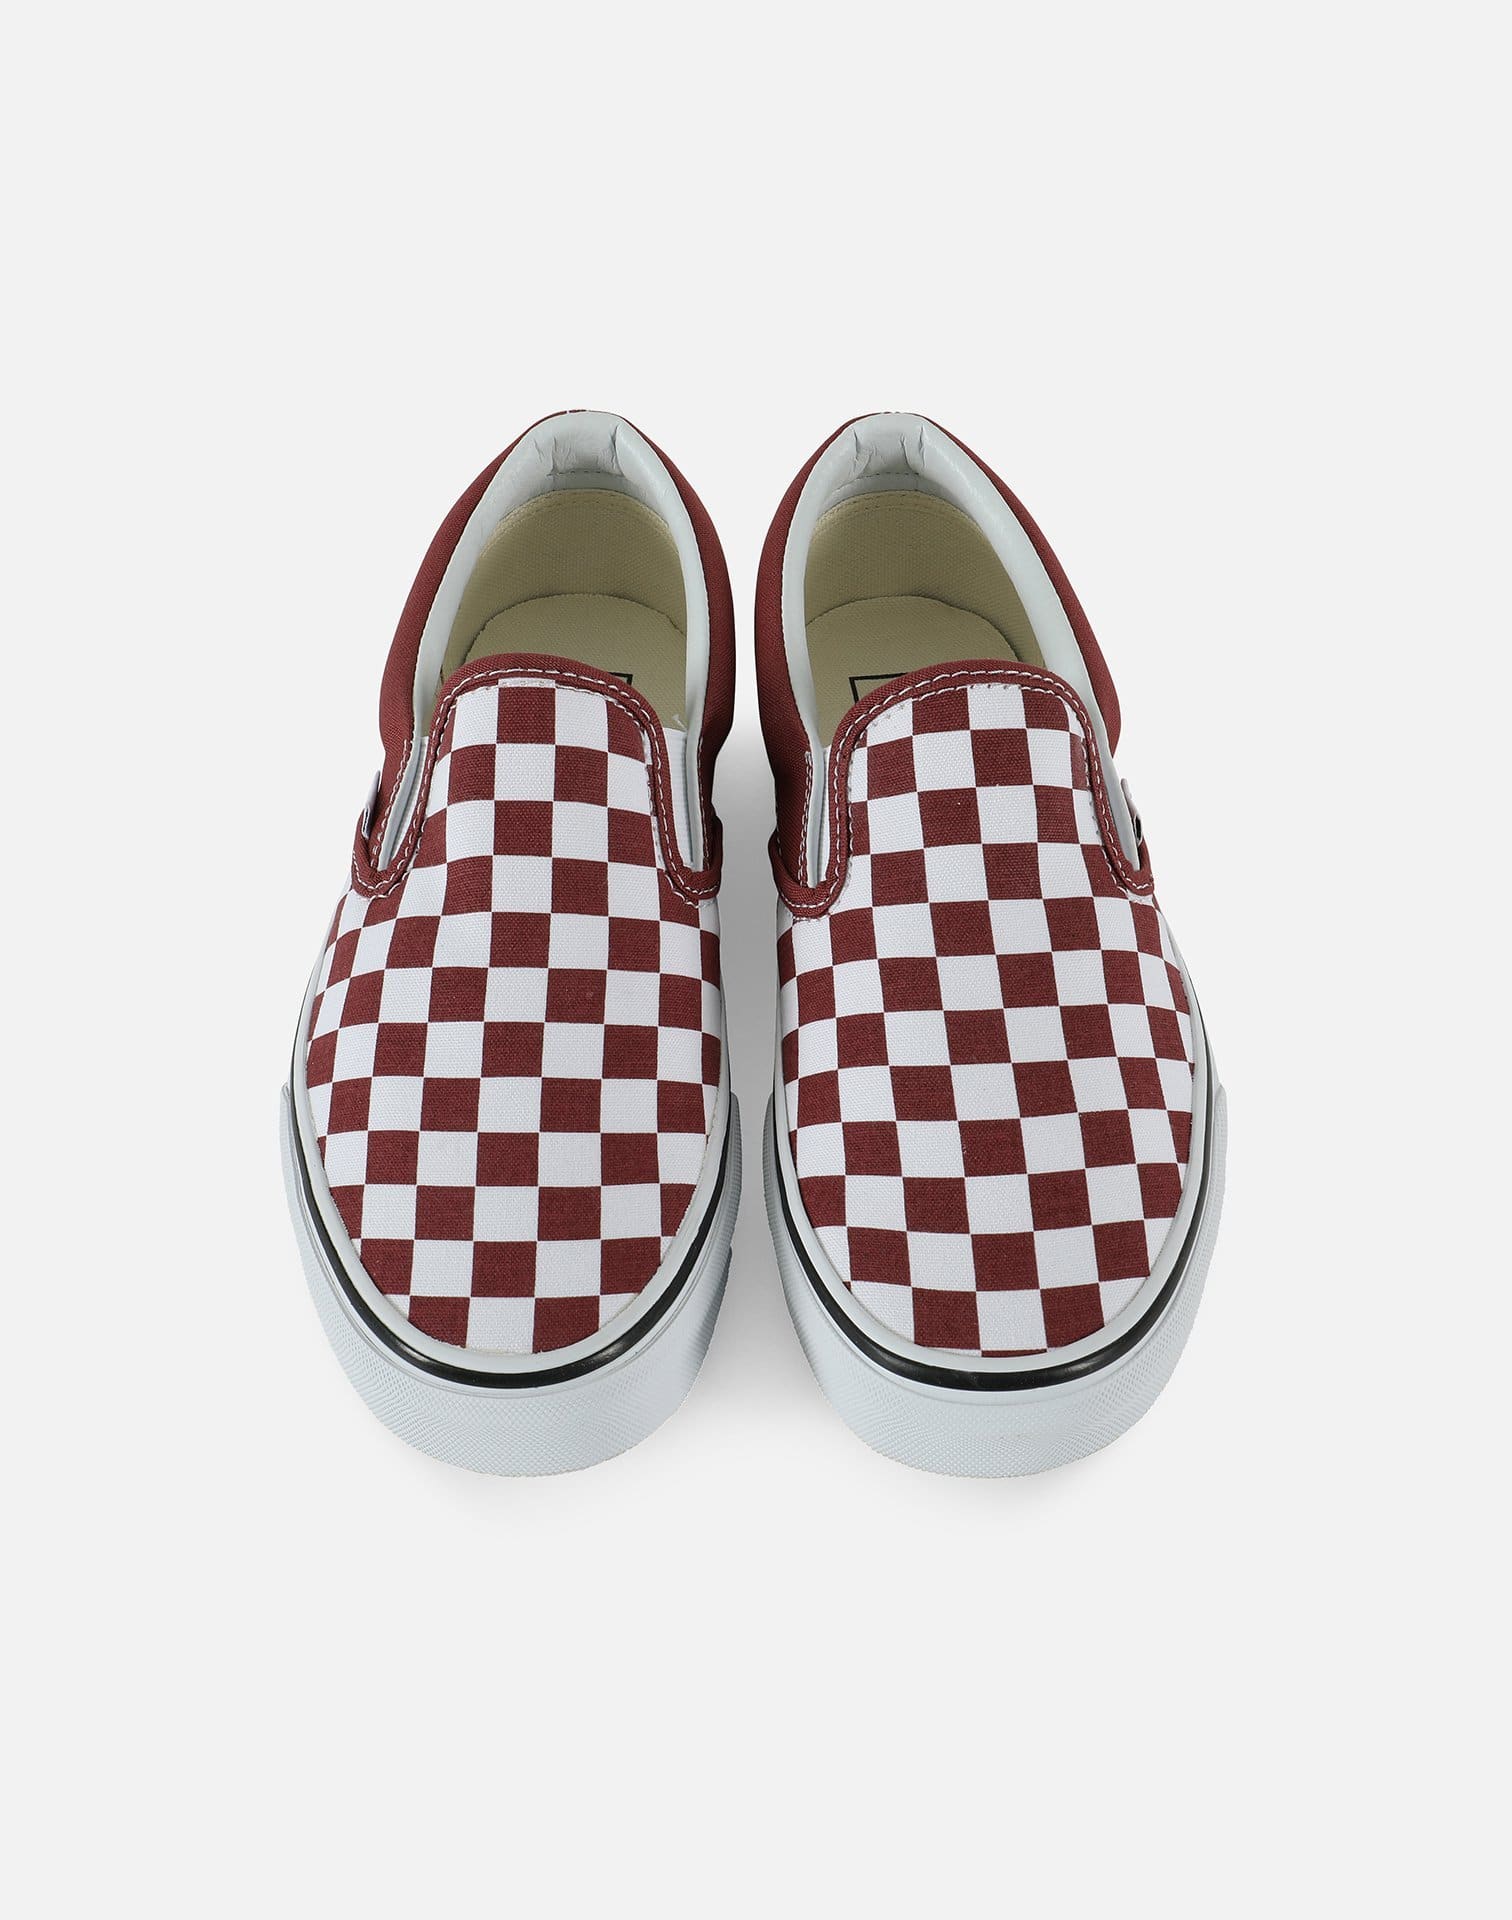 Vans Classic Slip-On Checkerboard